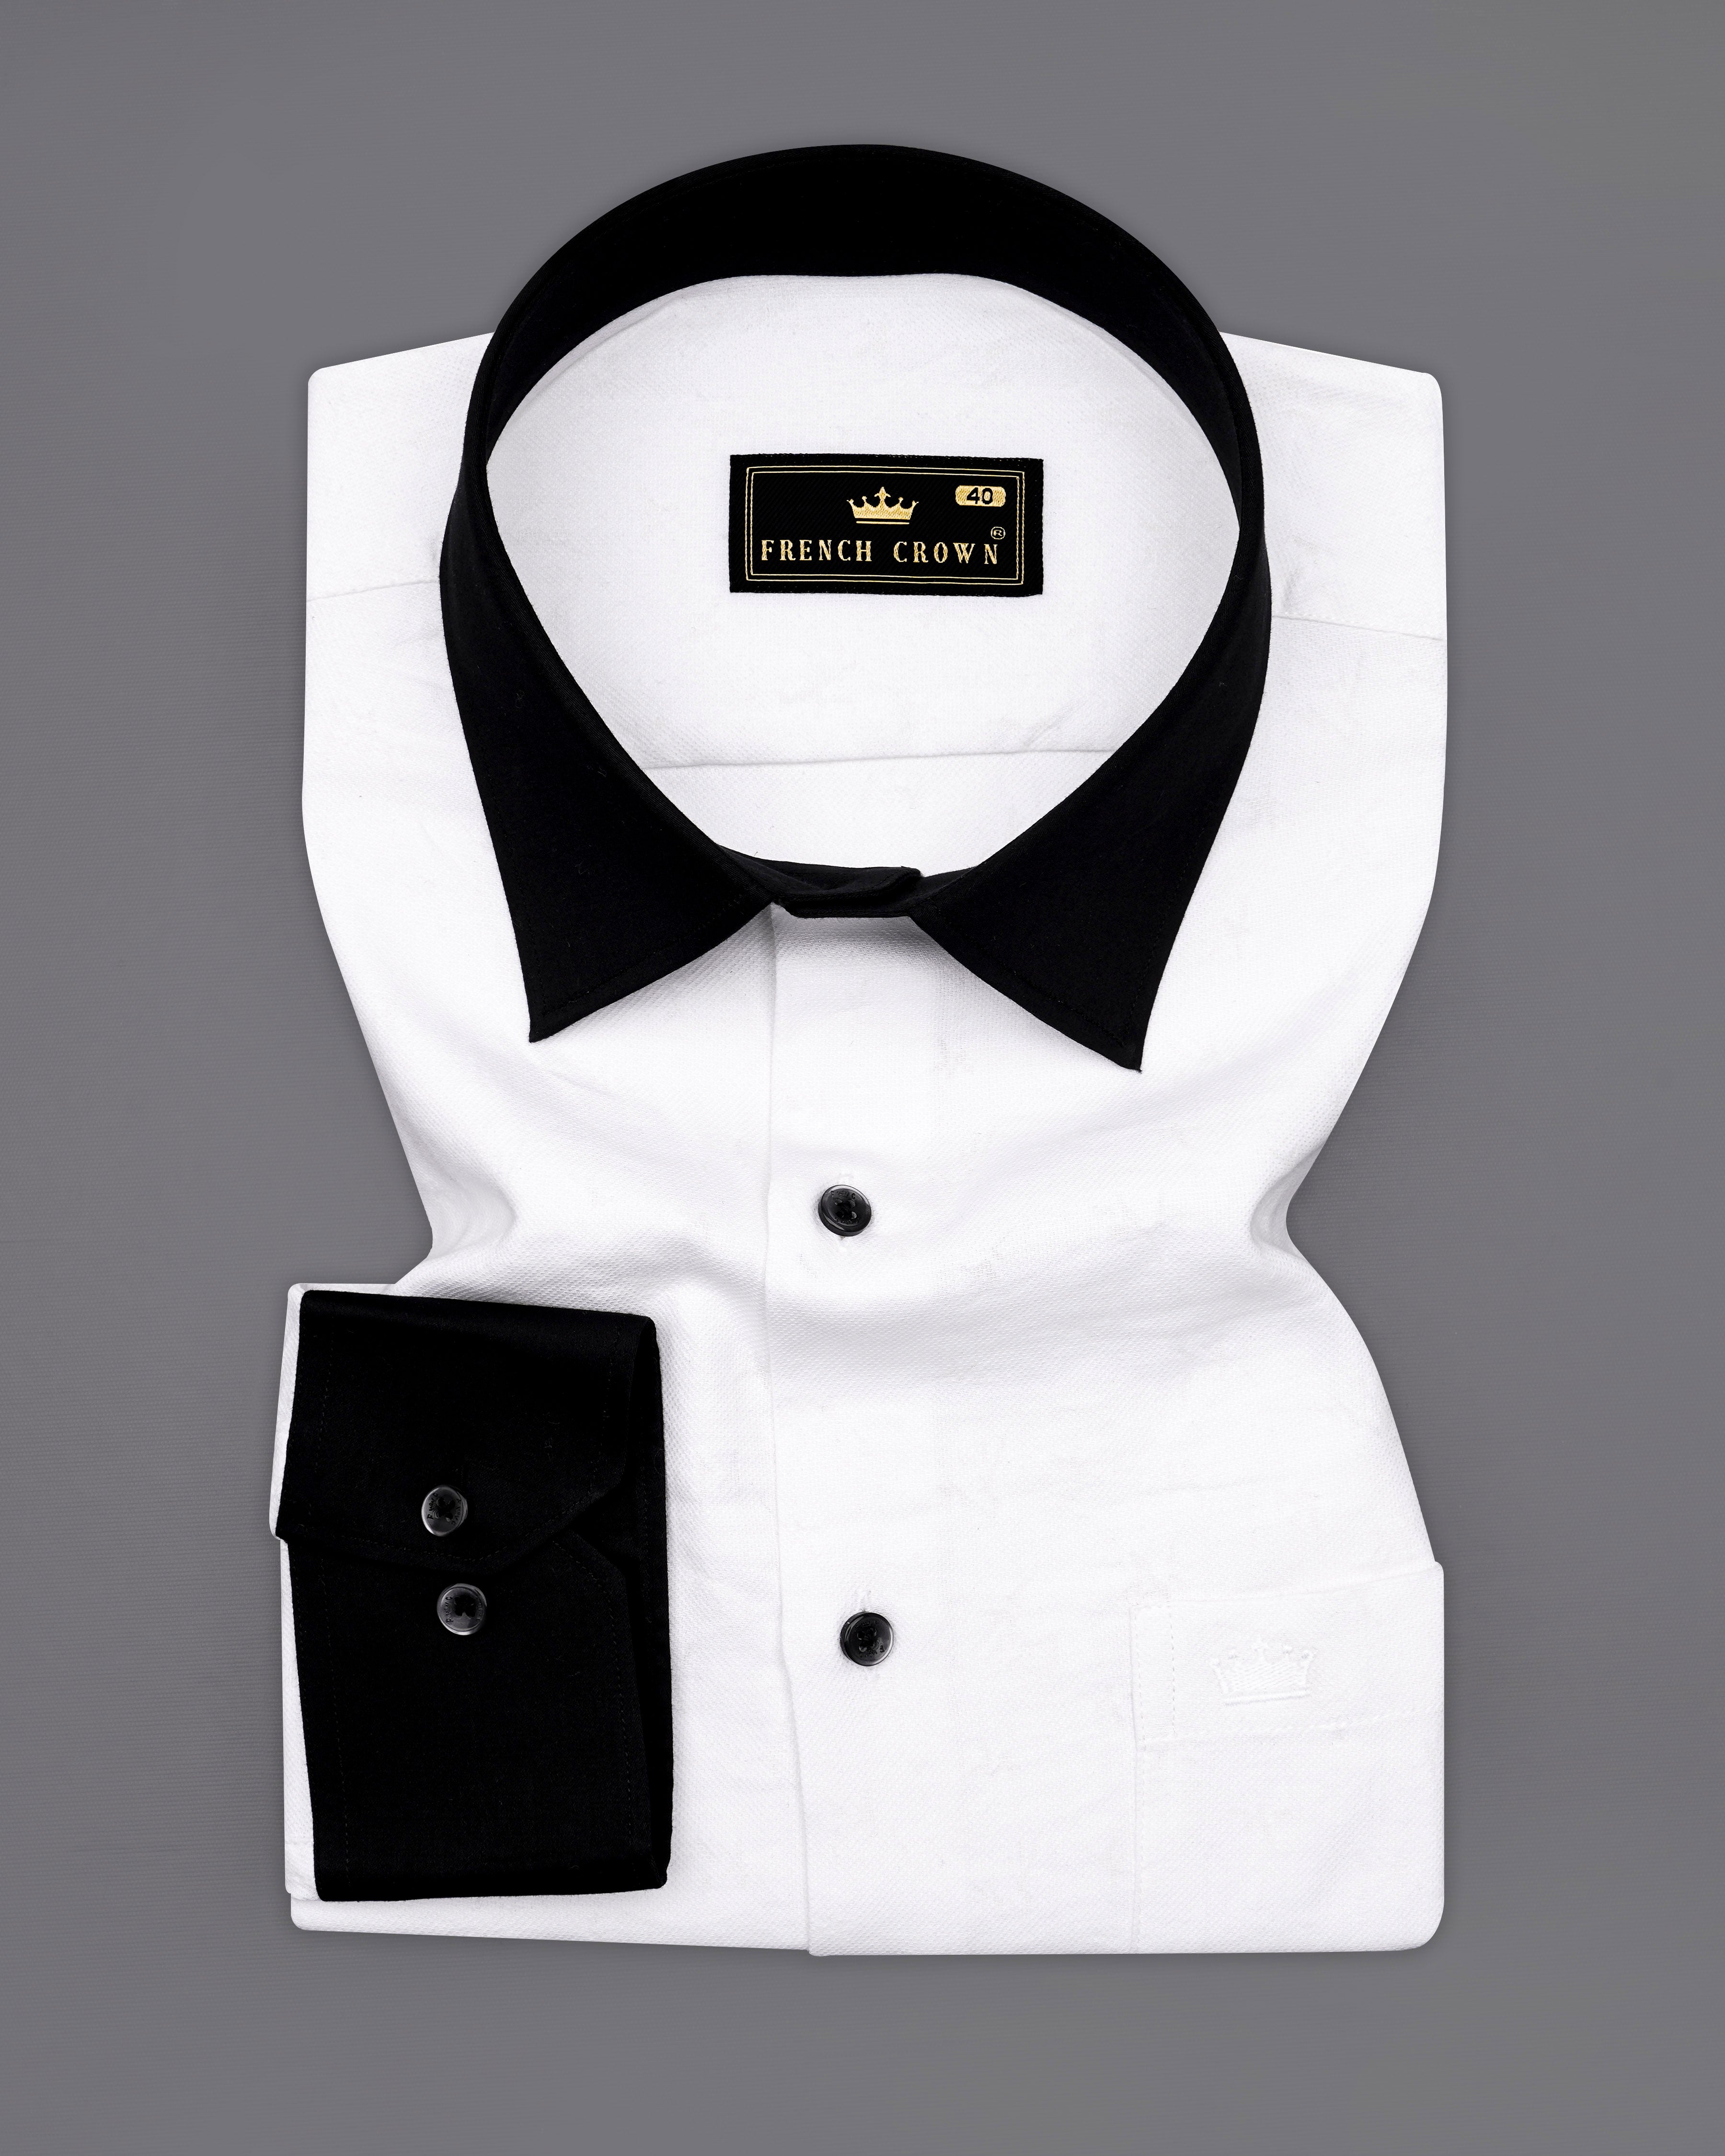 Bright White Jacquard Textured Premium Giza Cotton Shirt with Black Collar and Cuffs 9876-BCC-BLK-38, 9876-BCC-BLK-H-38, 9876-BCC-BLK-39, 9876-BCC-BLK-H-39, 9876-BCC-BLK-40, 9876-BCC-BLK-H-40, 9876-BCC-BLK-42, 9876-BCC-BLK-H-42, 9876-BCC-BLK-44, 9876-BCC-BLK-H-44, 9876-BCC-BLK-46, 9876-BCC-BLK-H-46, 9876-BCC-BLK-48, 9876-BCC-BLK-H-48, 9876-BCC-BLK-50, 9876-BCC-BLK-H-50, 9876-BCC-BLK-52, 9876-BCC-BLK-H-52